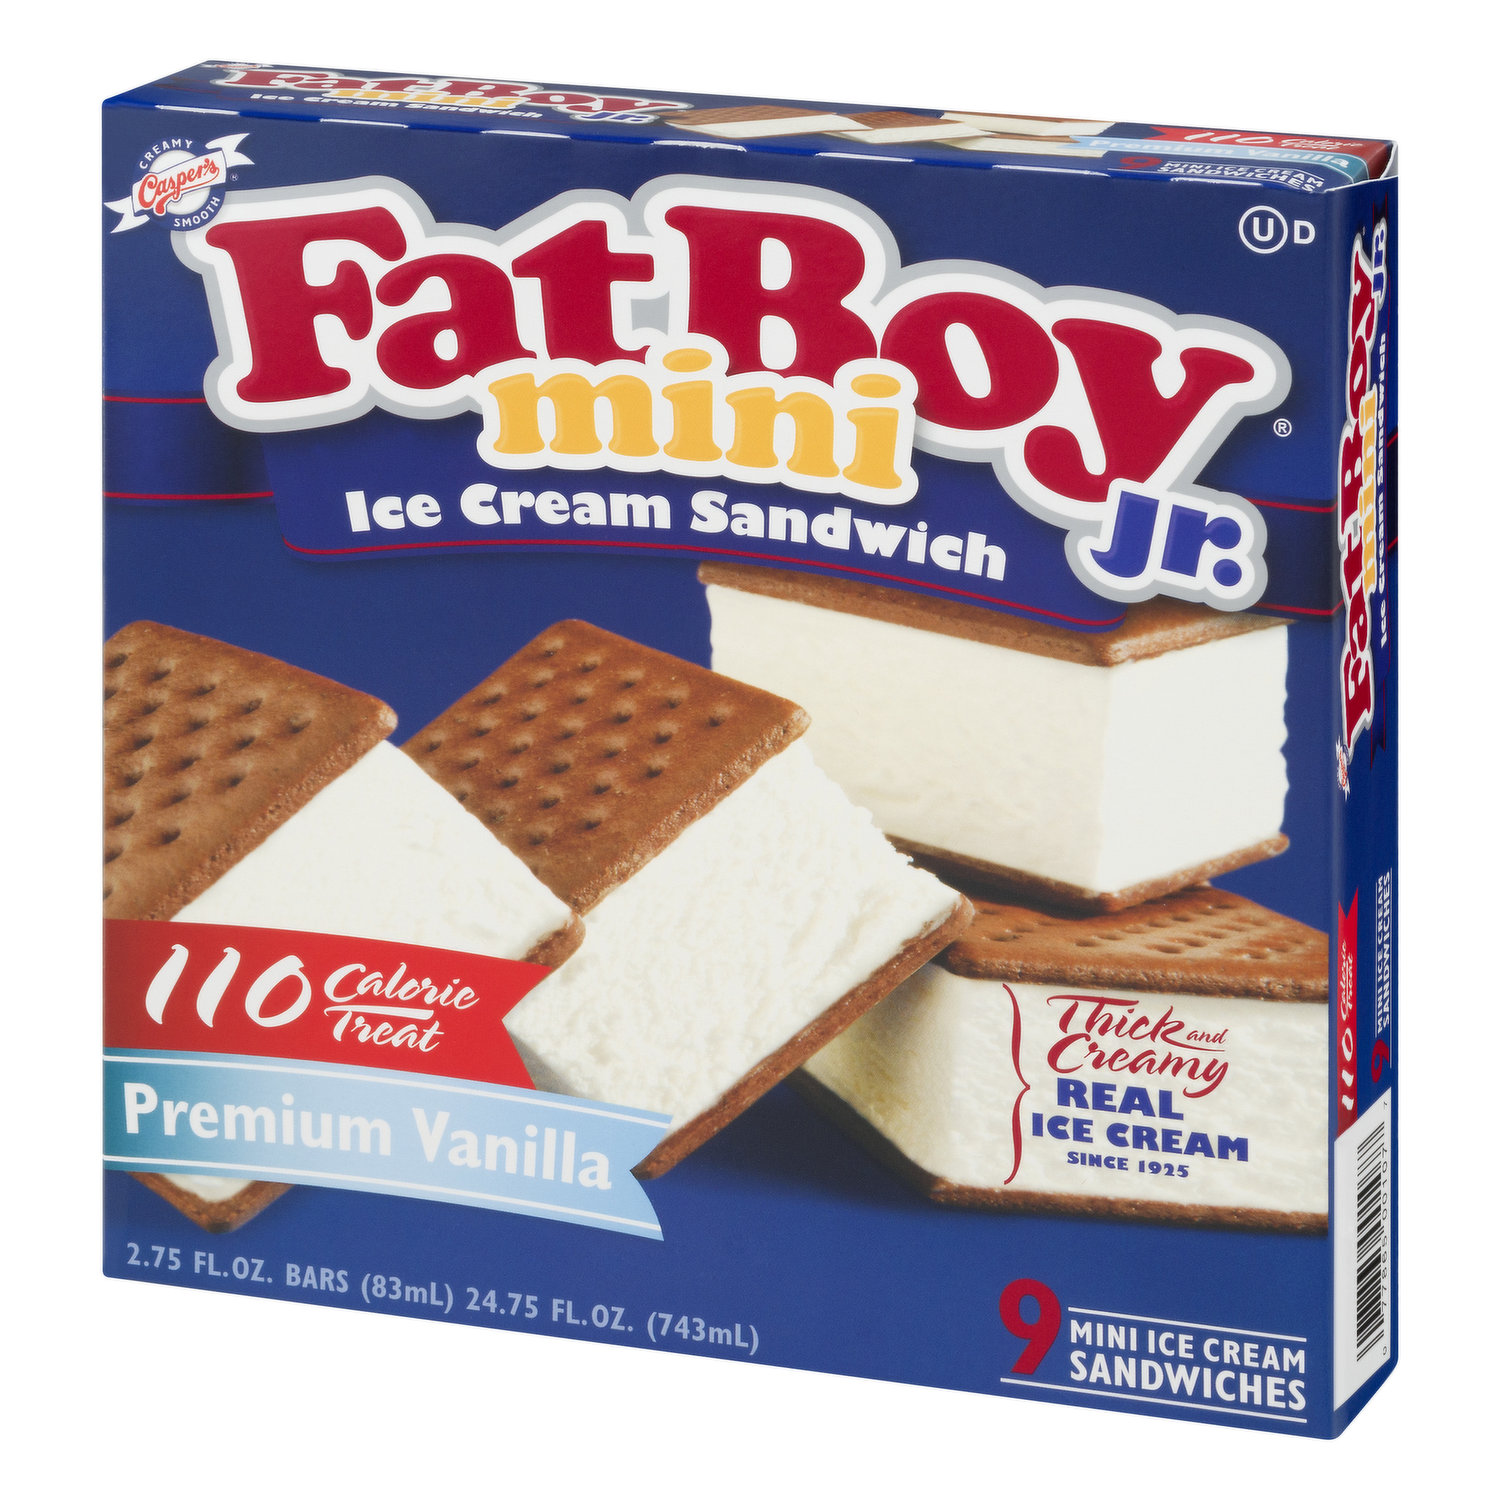 FatBoy Ice Cream  NEW! Famous FatBoy Vanilla Tub!